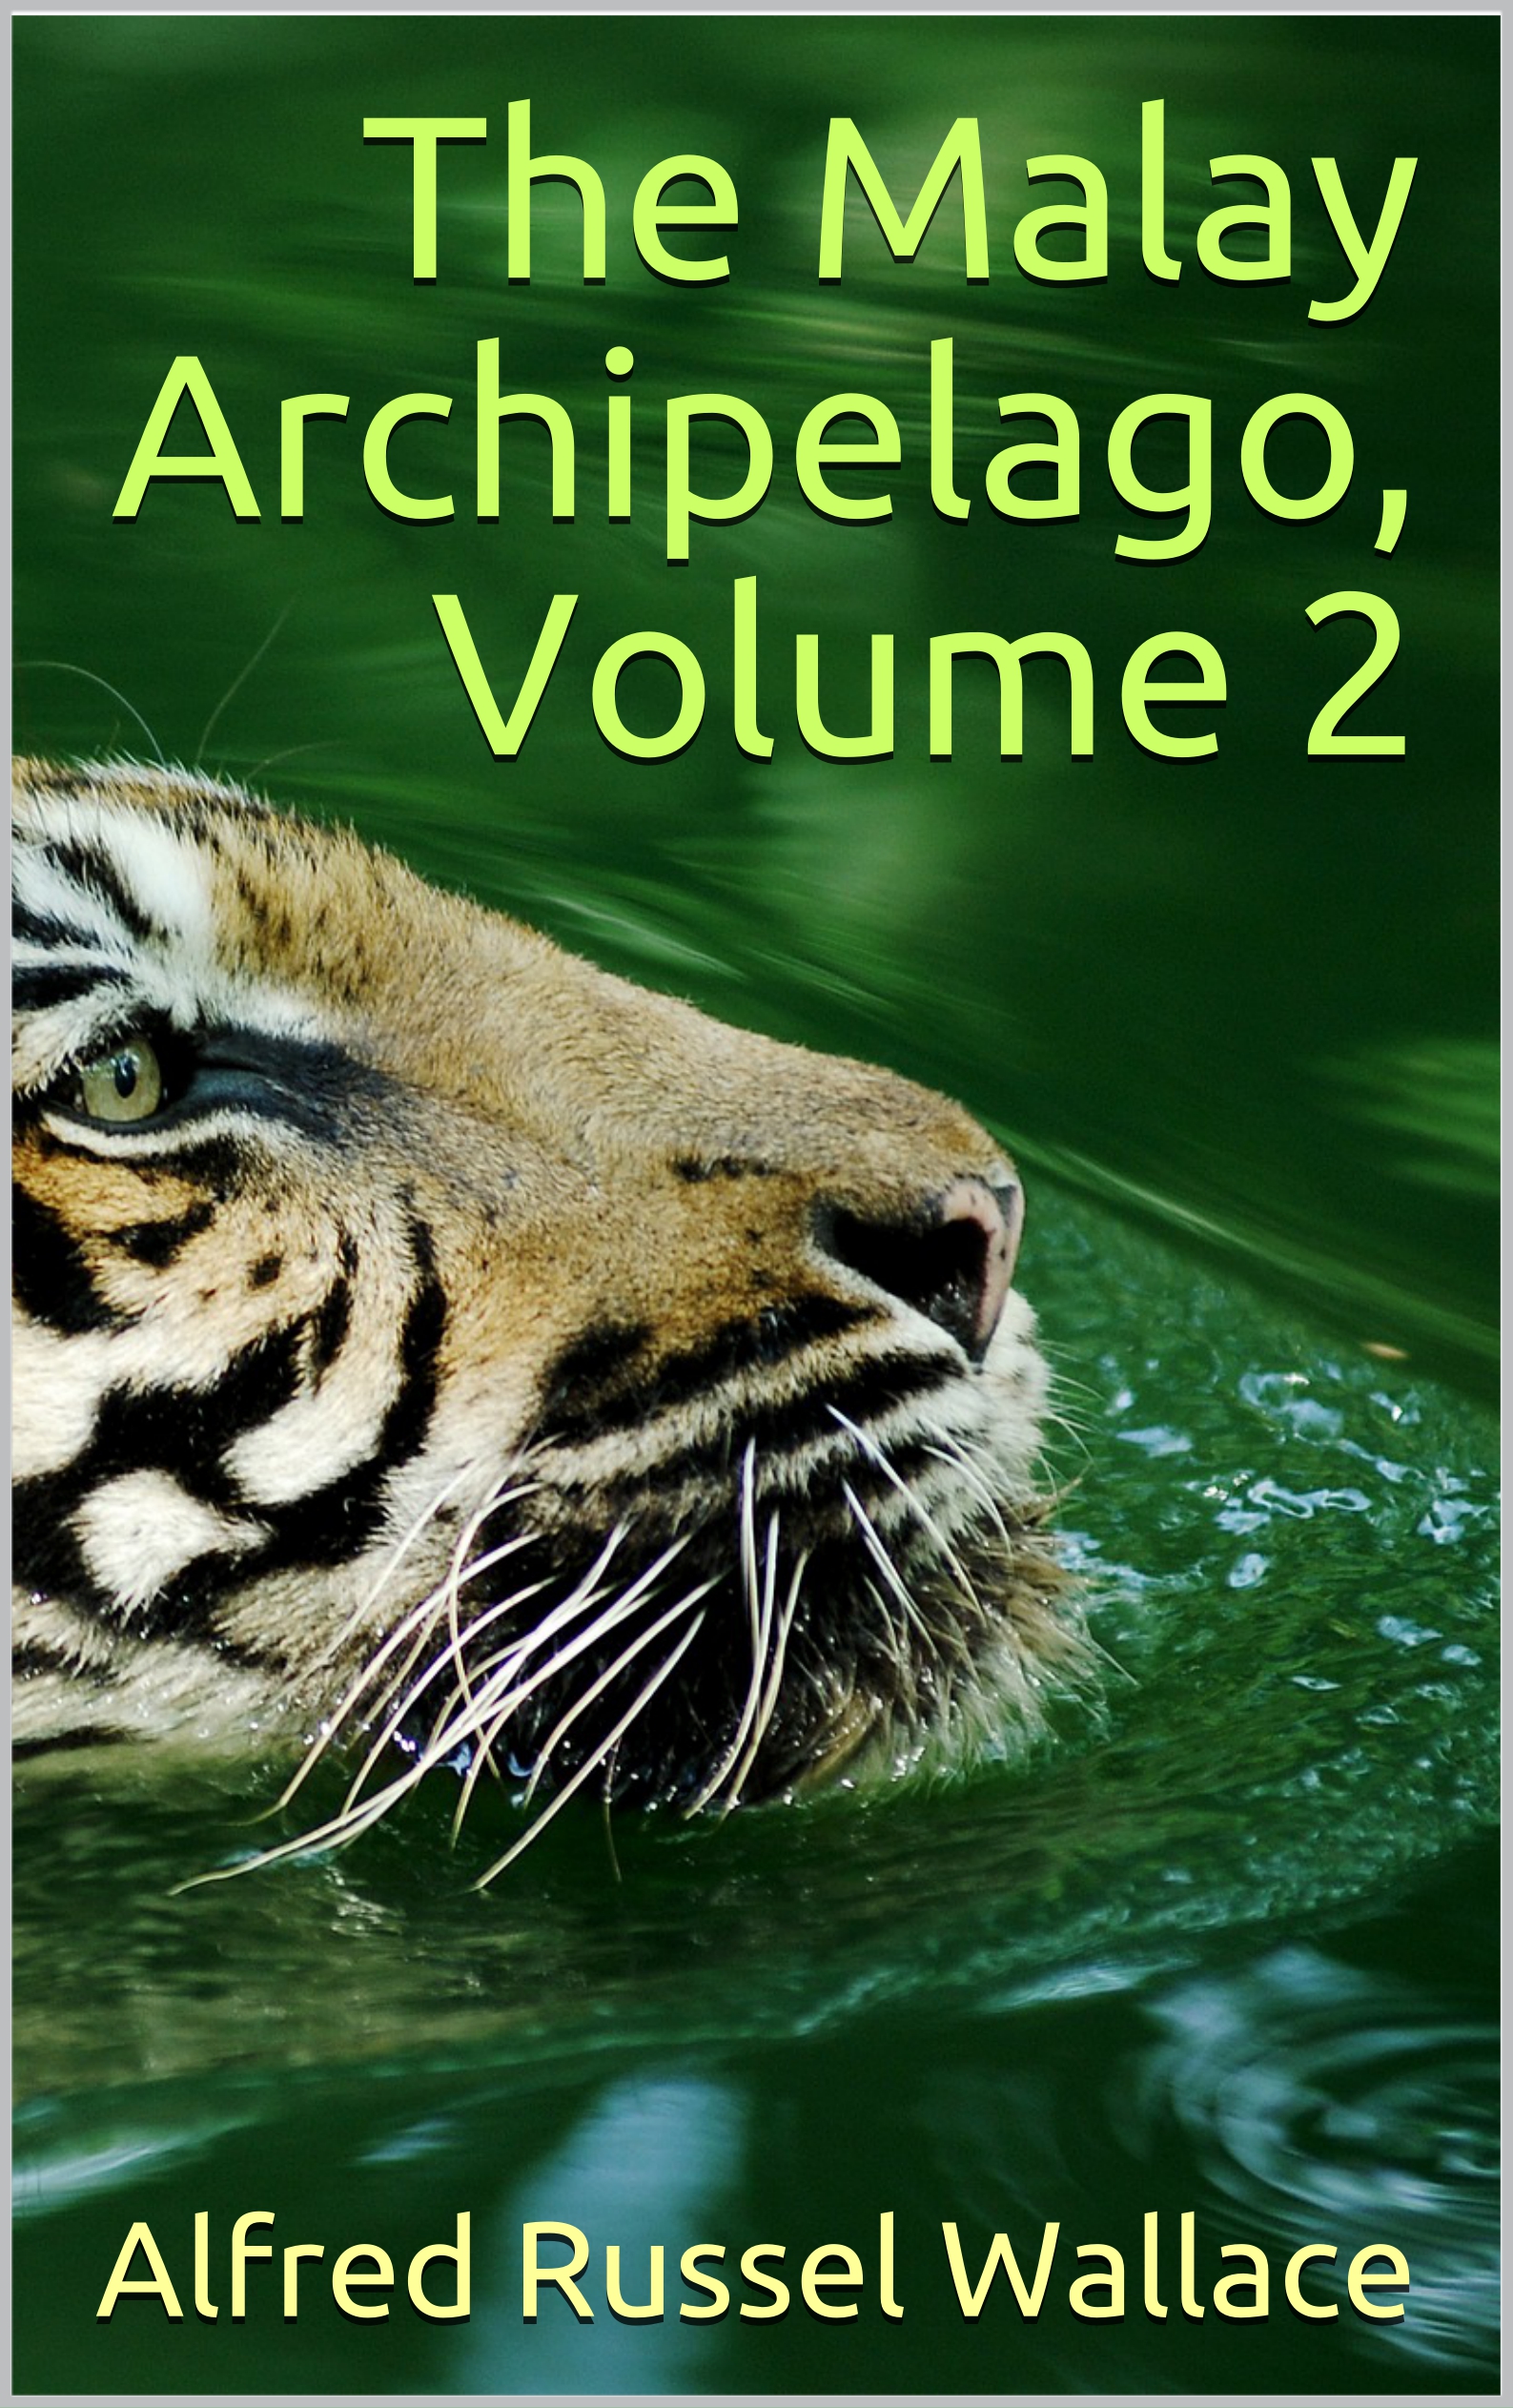  The Malay Archipelago, Volume 2 